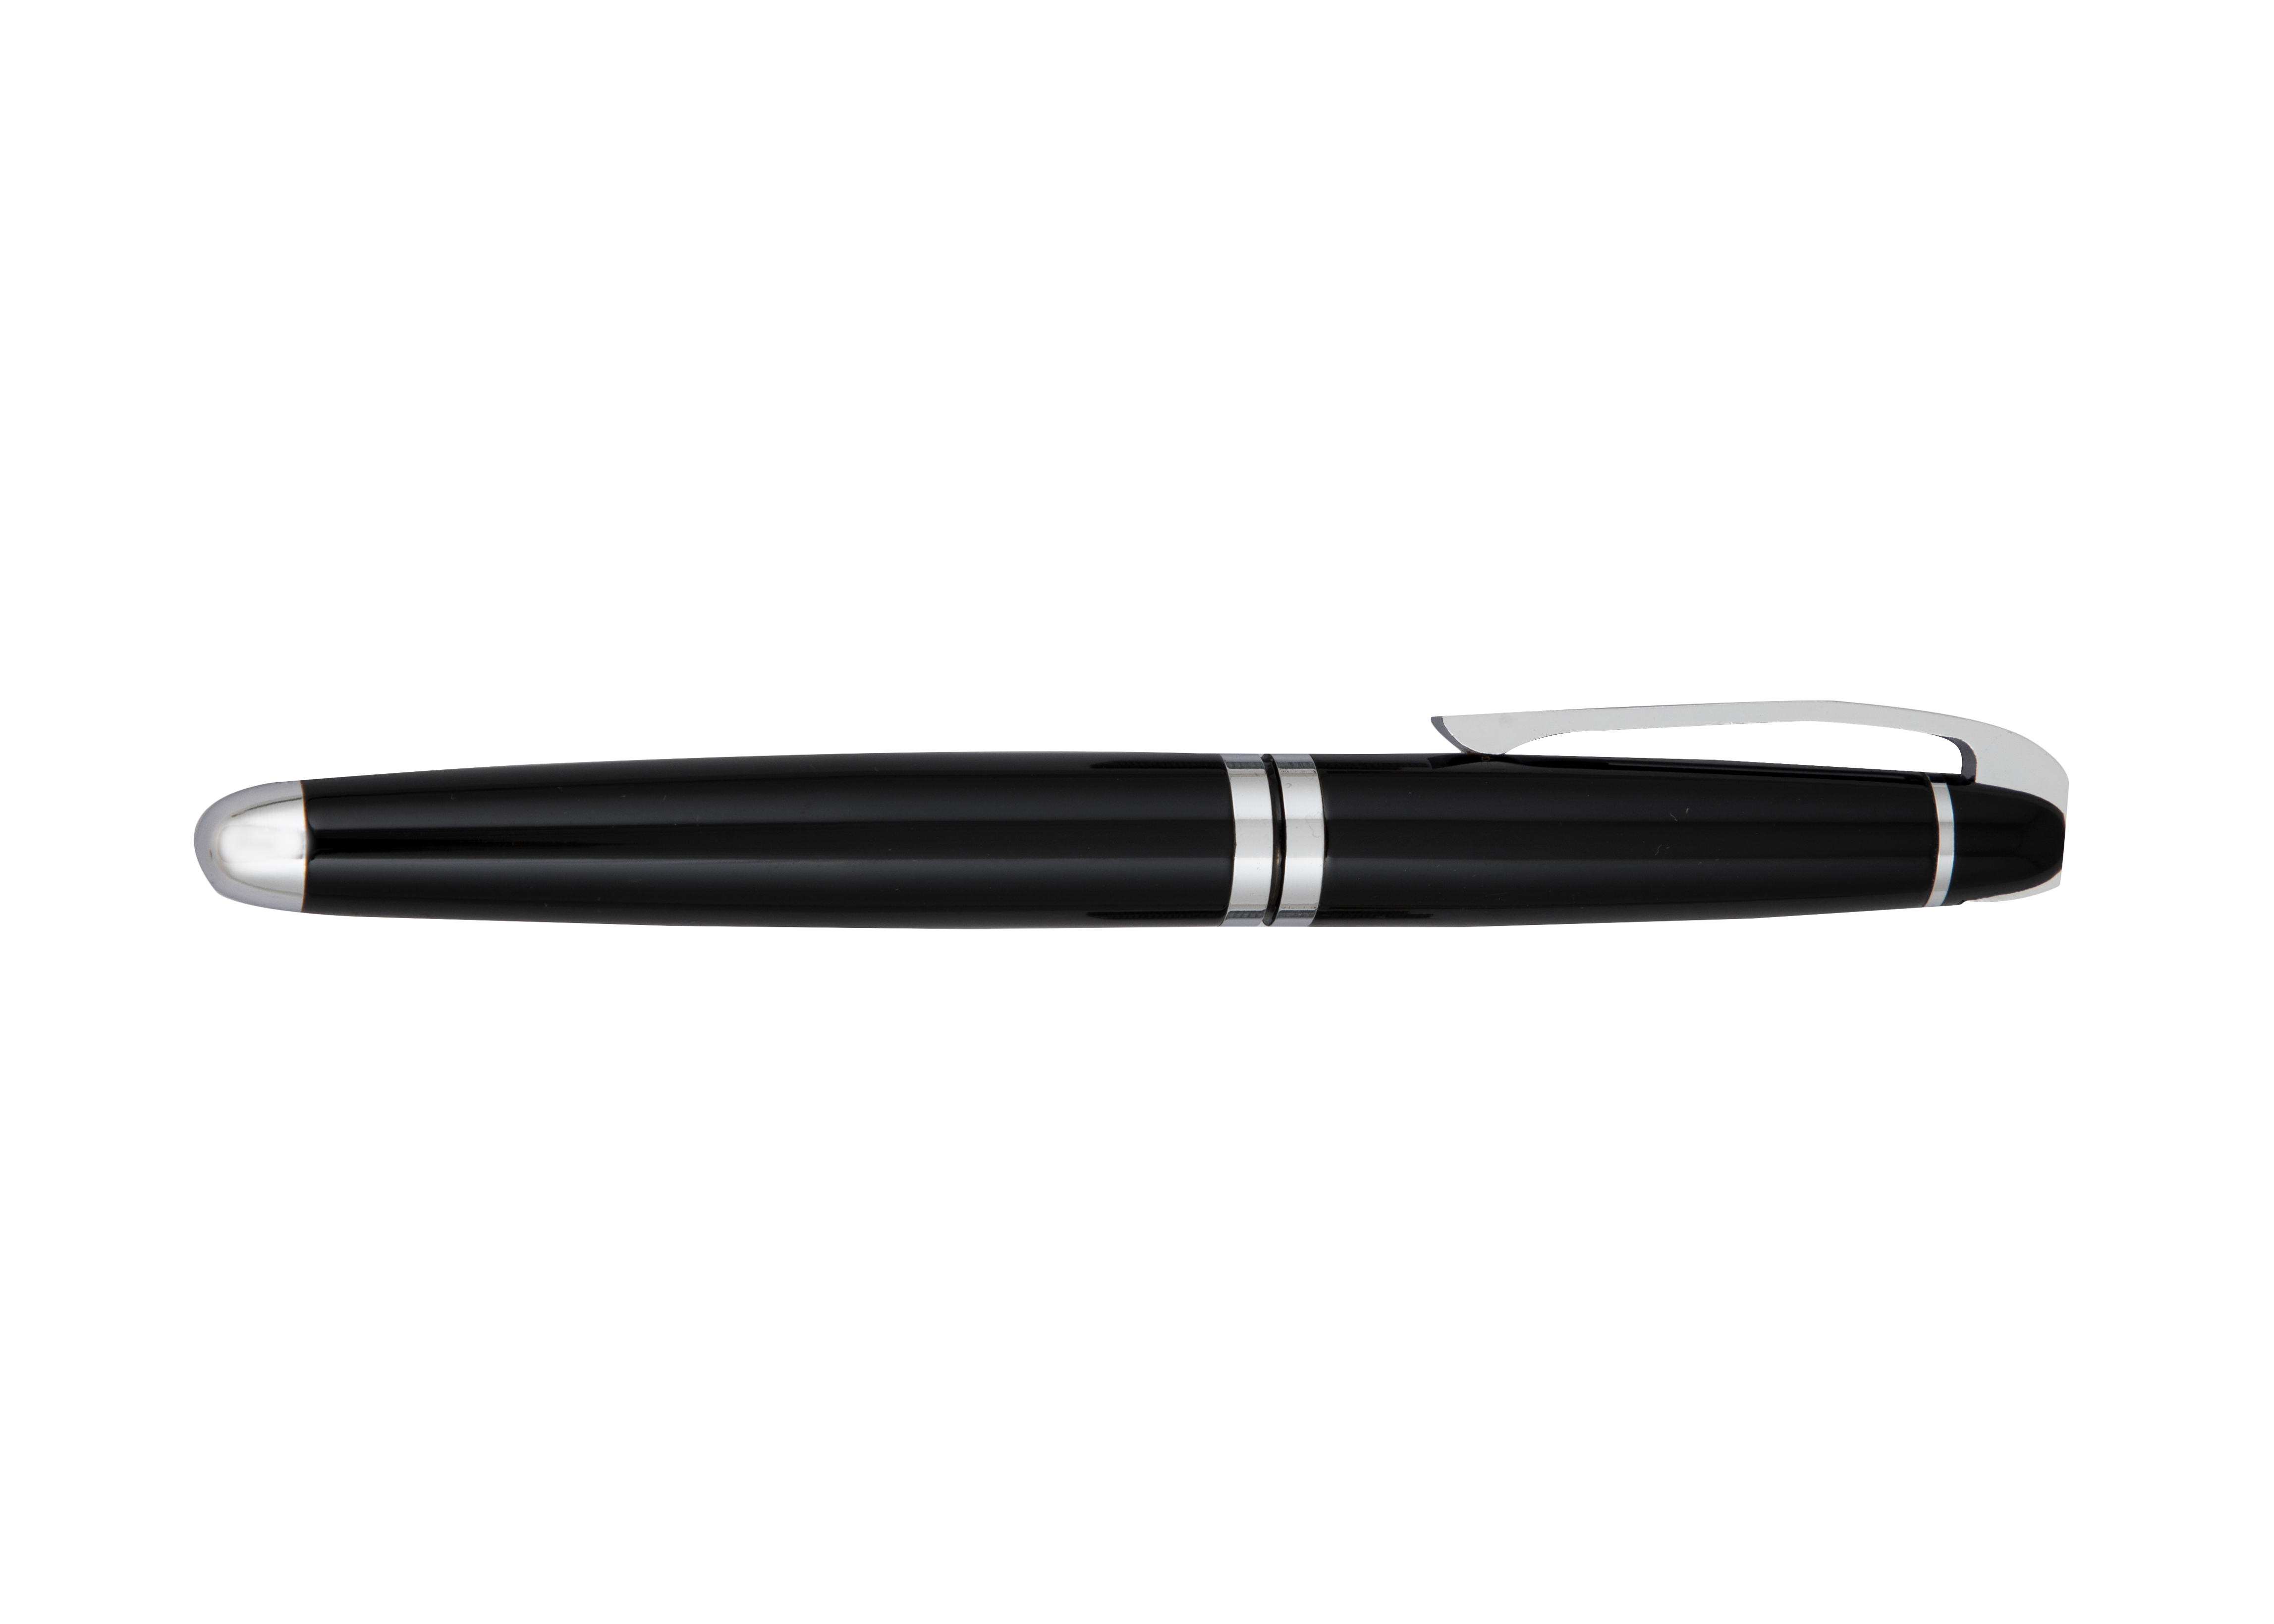 Safari Black Roller Ball Pen